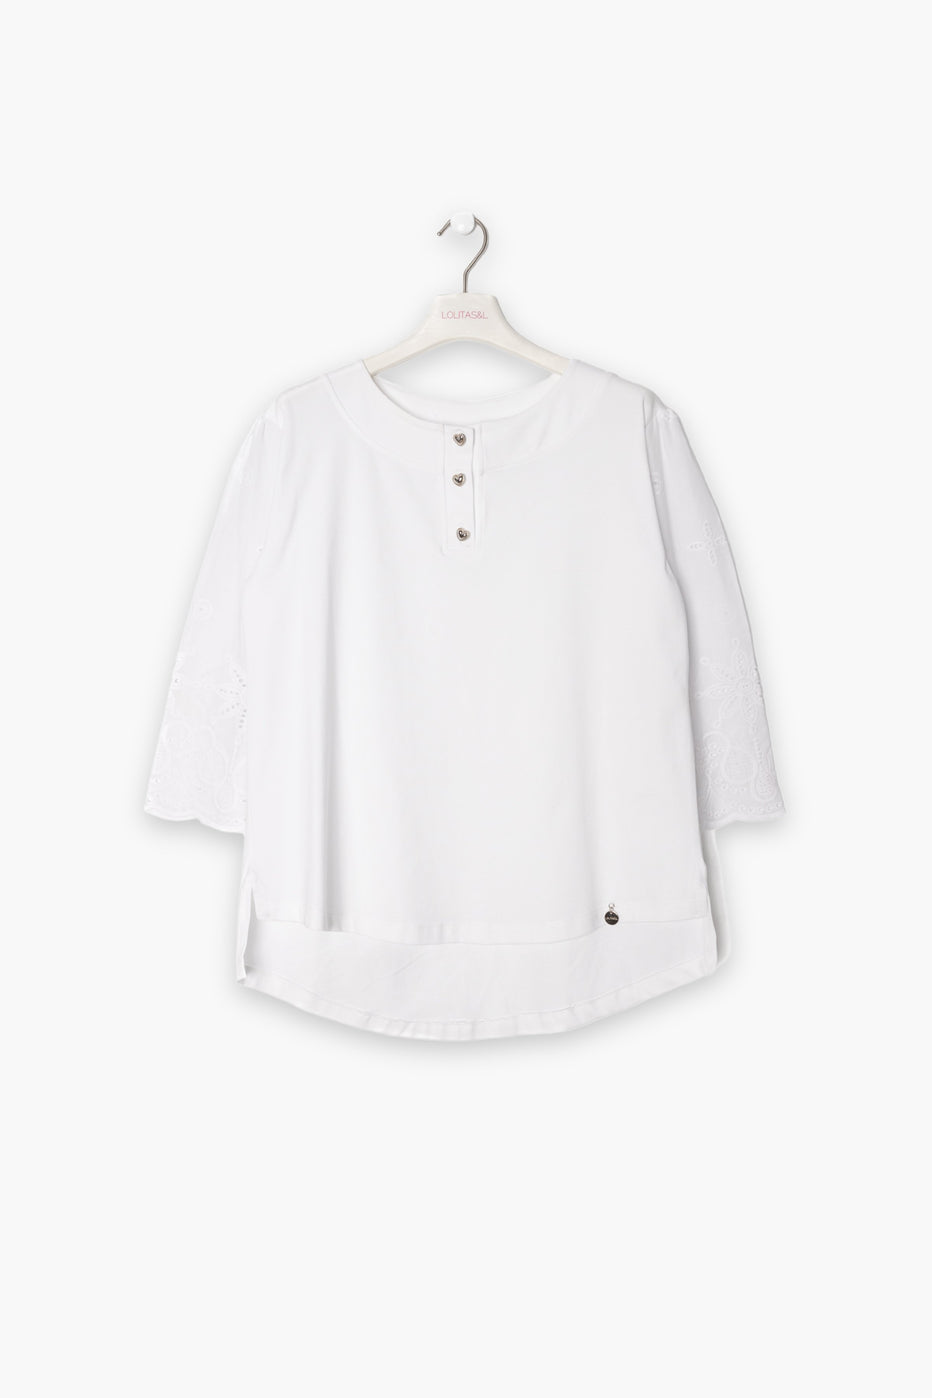 Camiseta blanca manga bordada con botones en el escote LolitasyL - lolitasyl.com